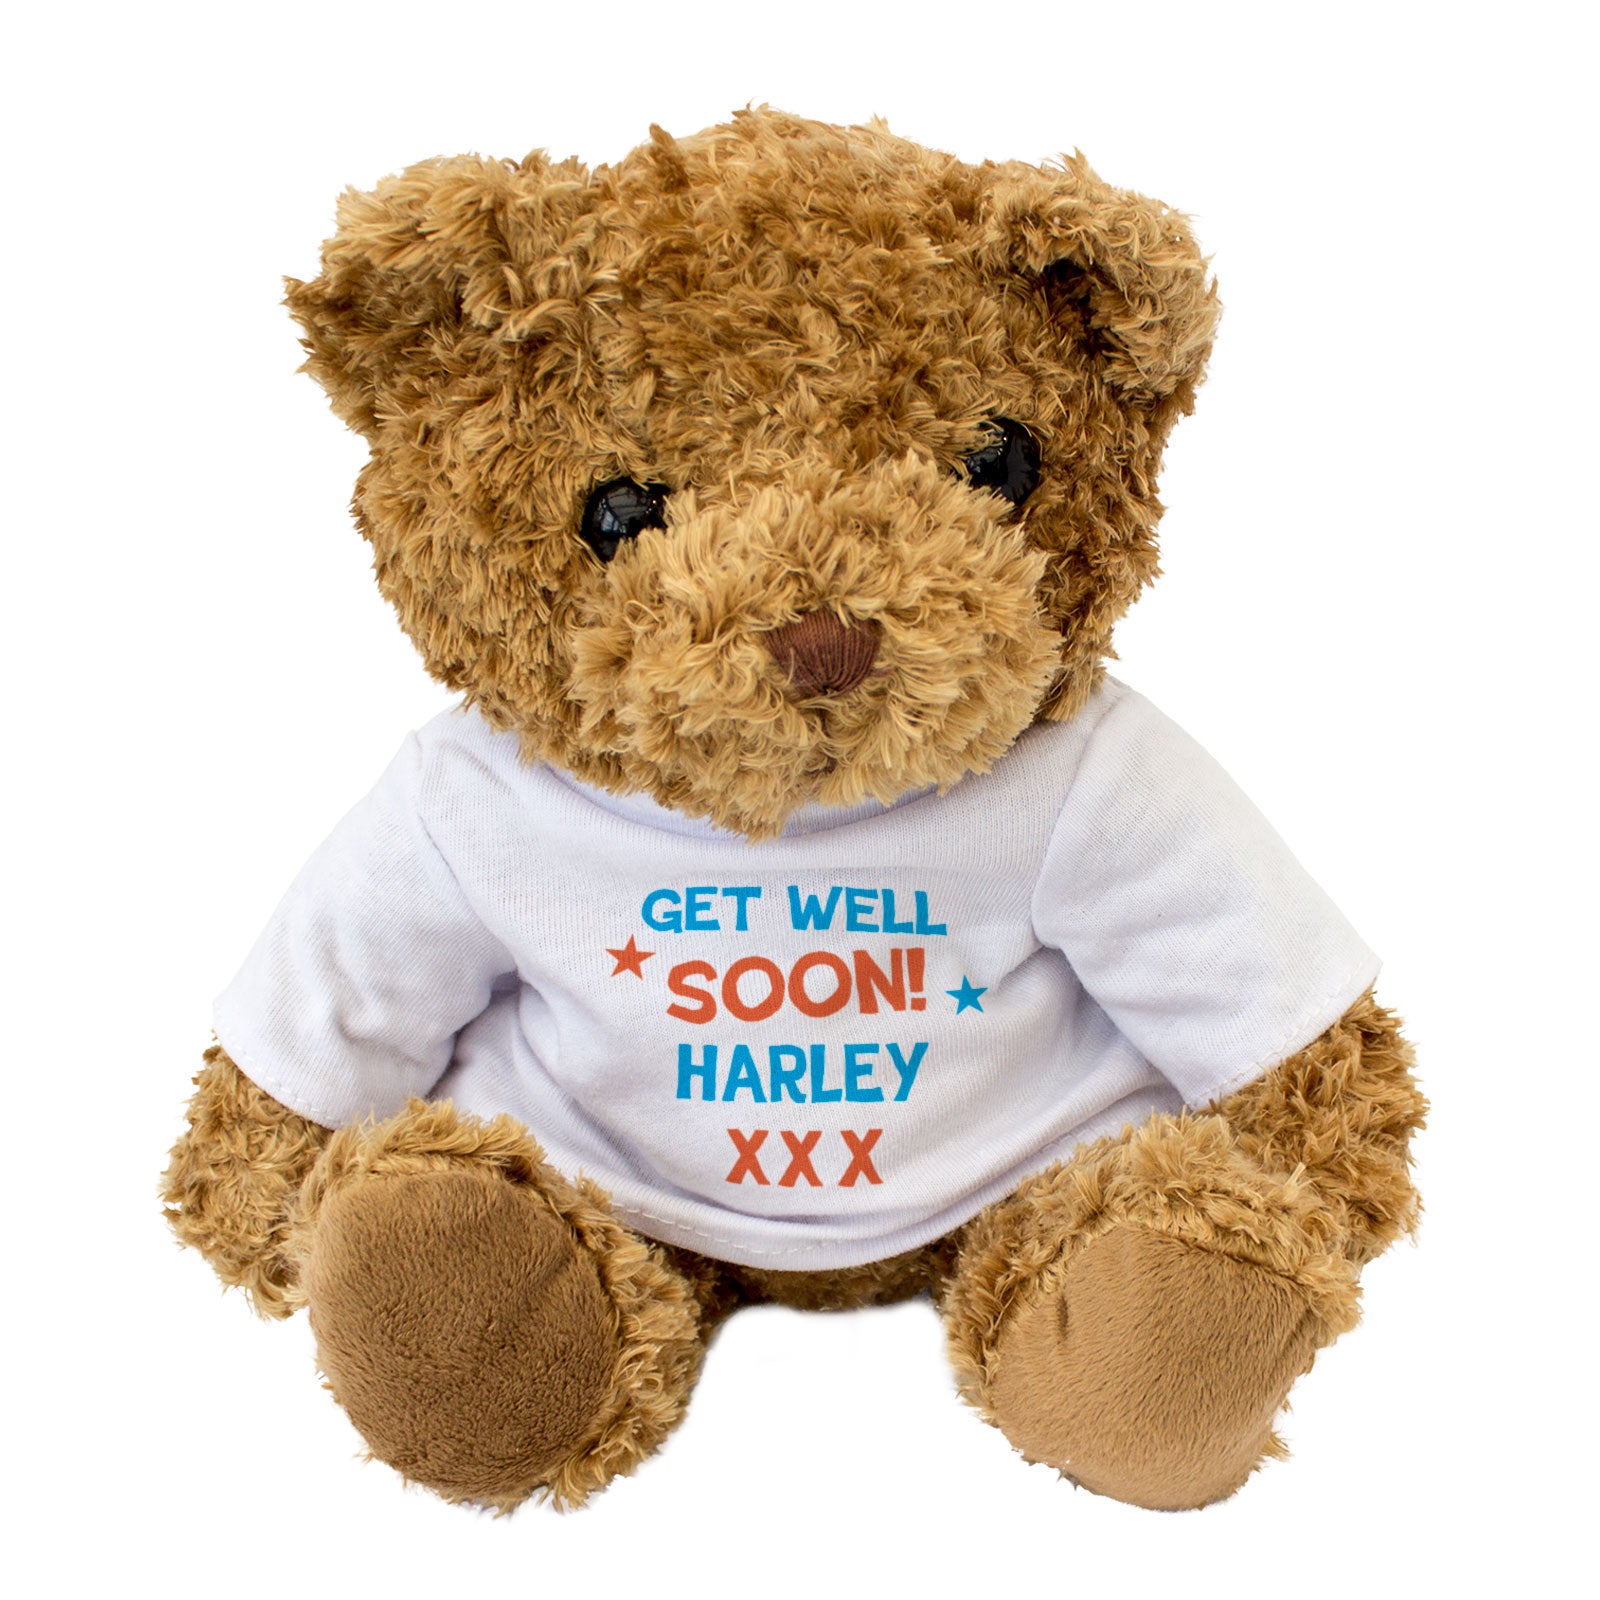 Get Well Soon Harley - Teddy Bear